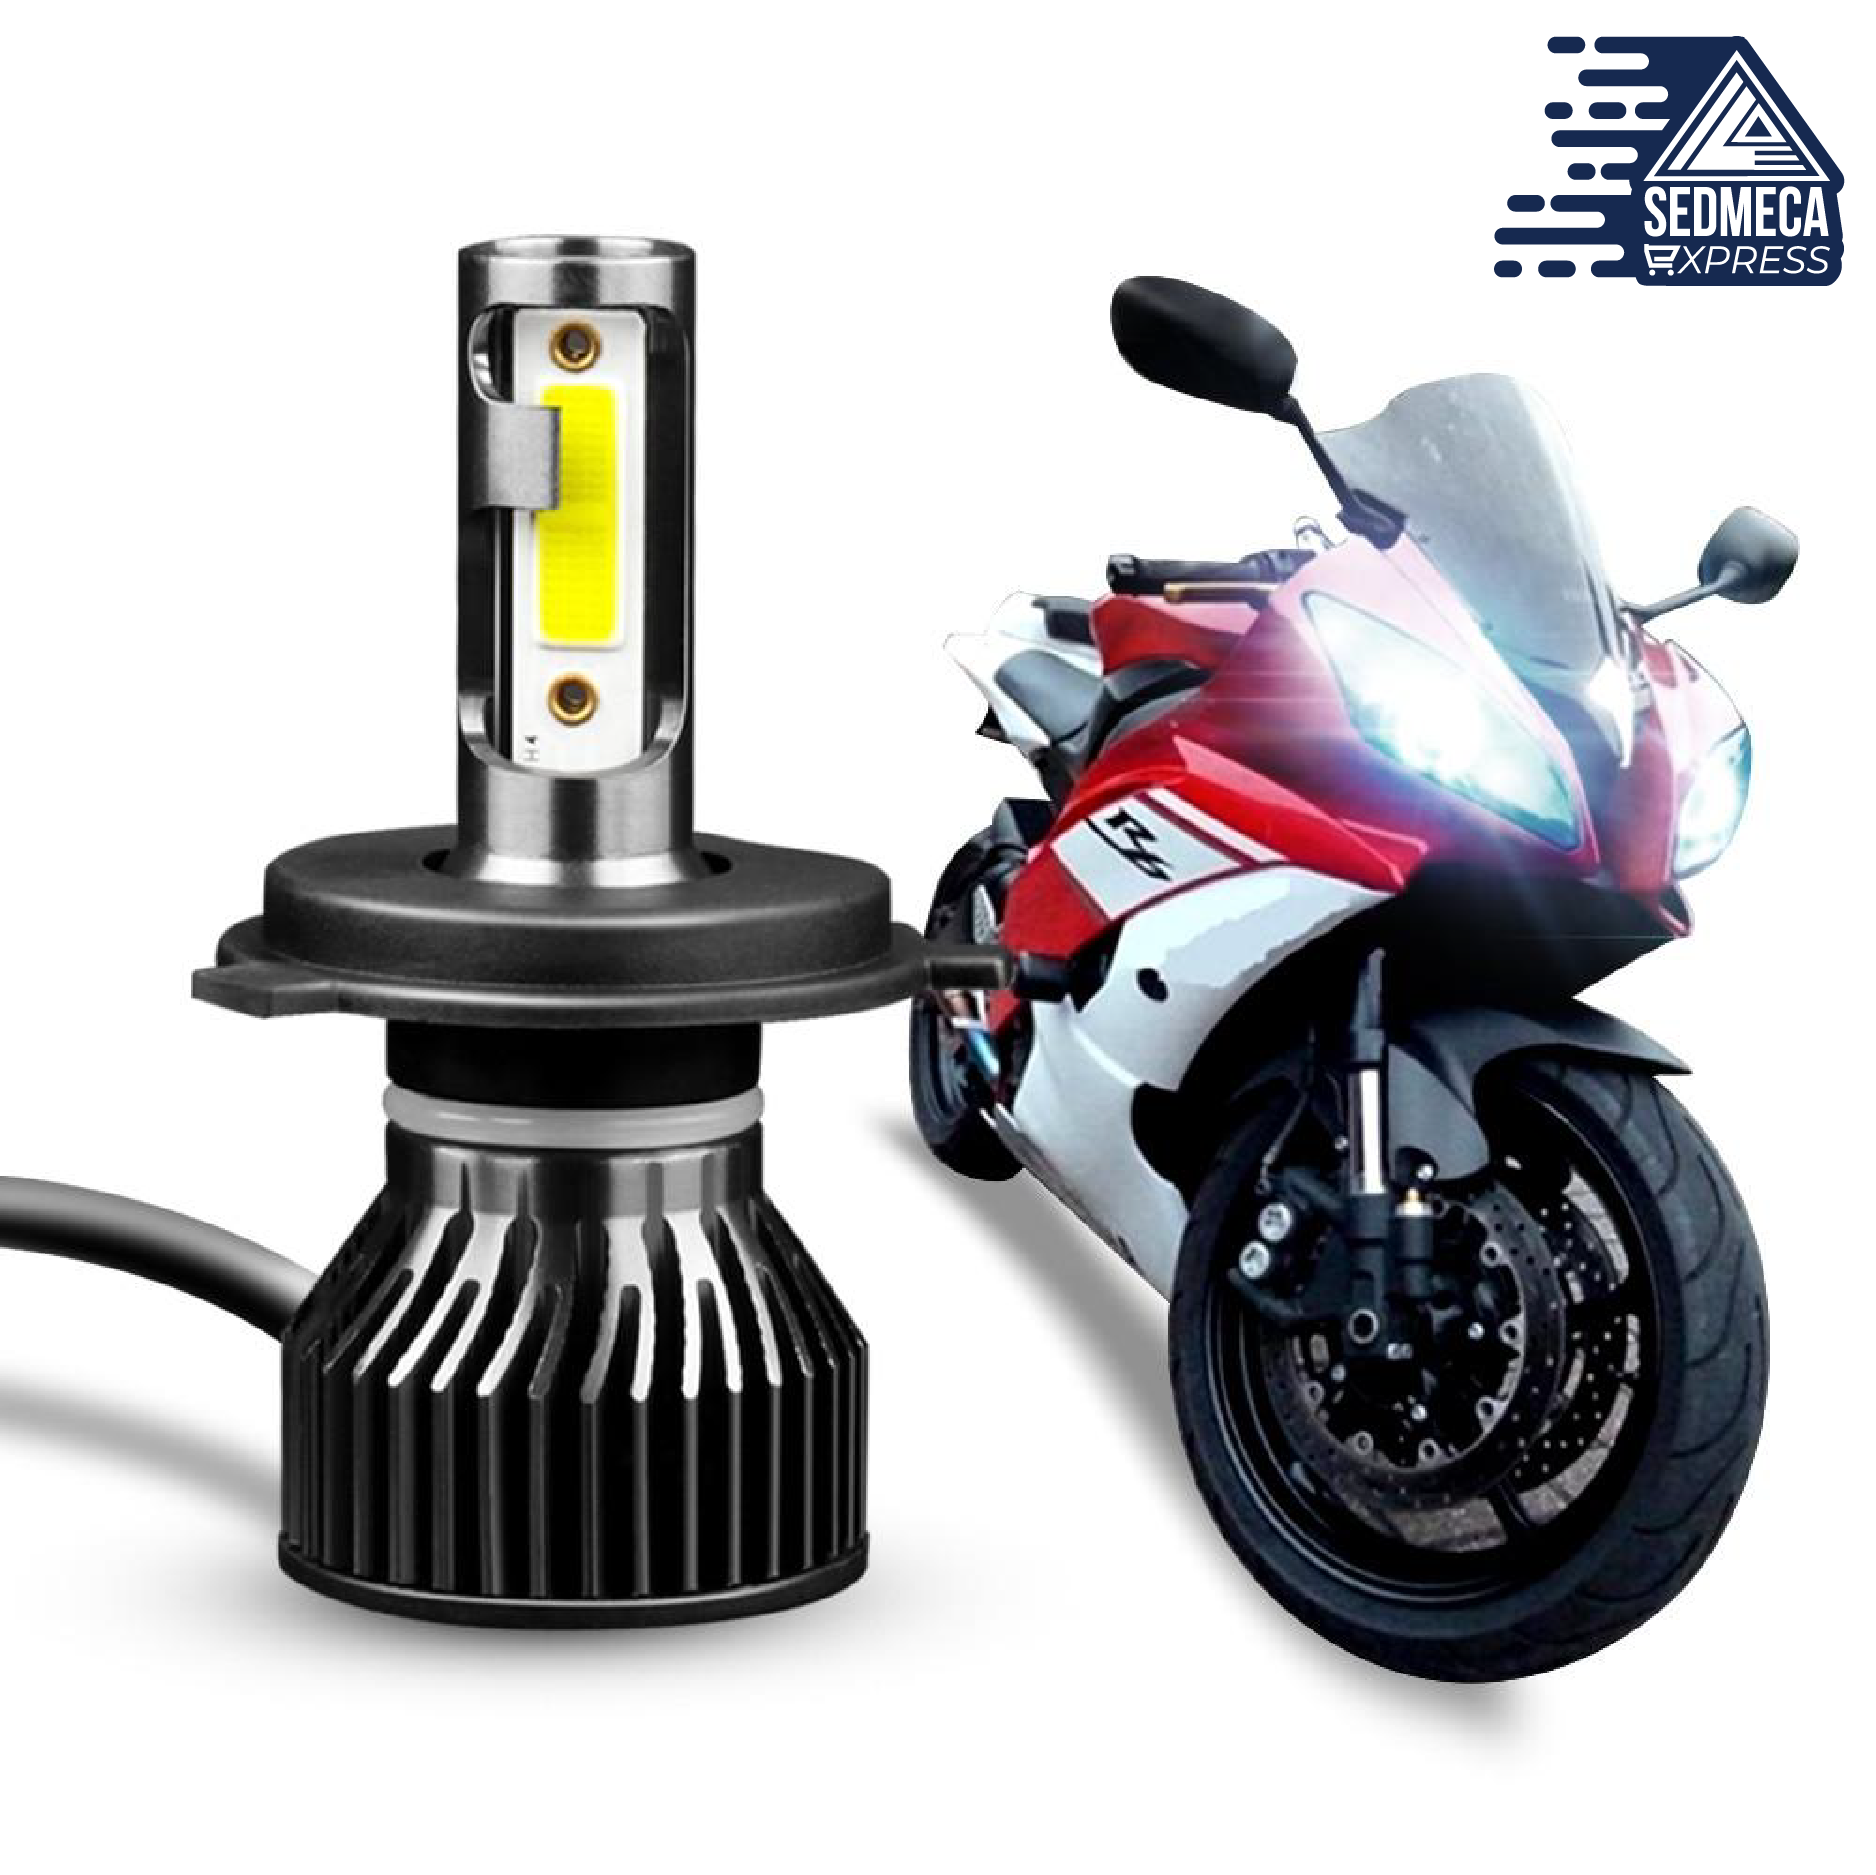 H4 LED Headlight Bulb | Motorcycle Lights | Brightest h4 LED Bulbs